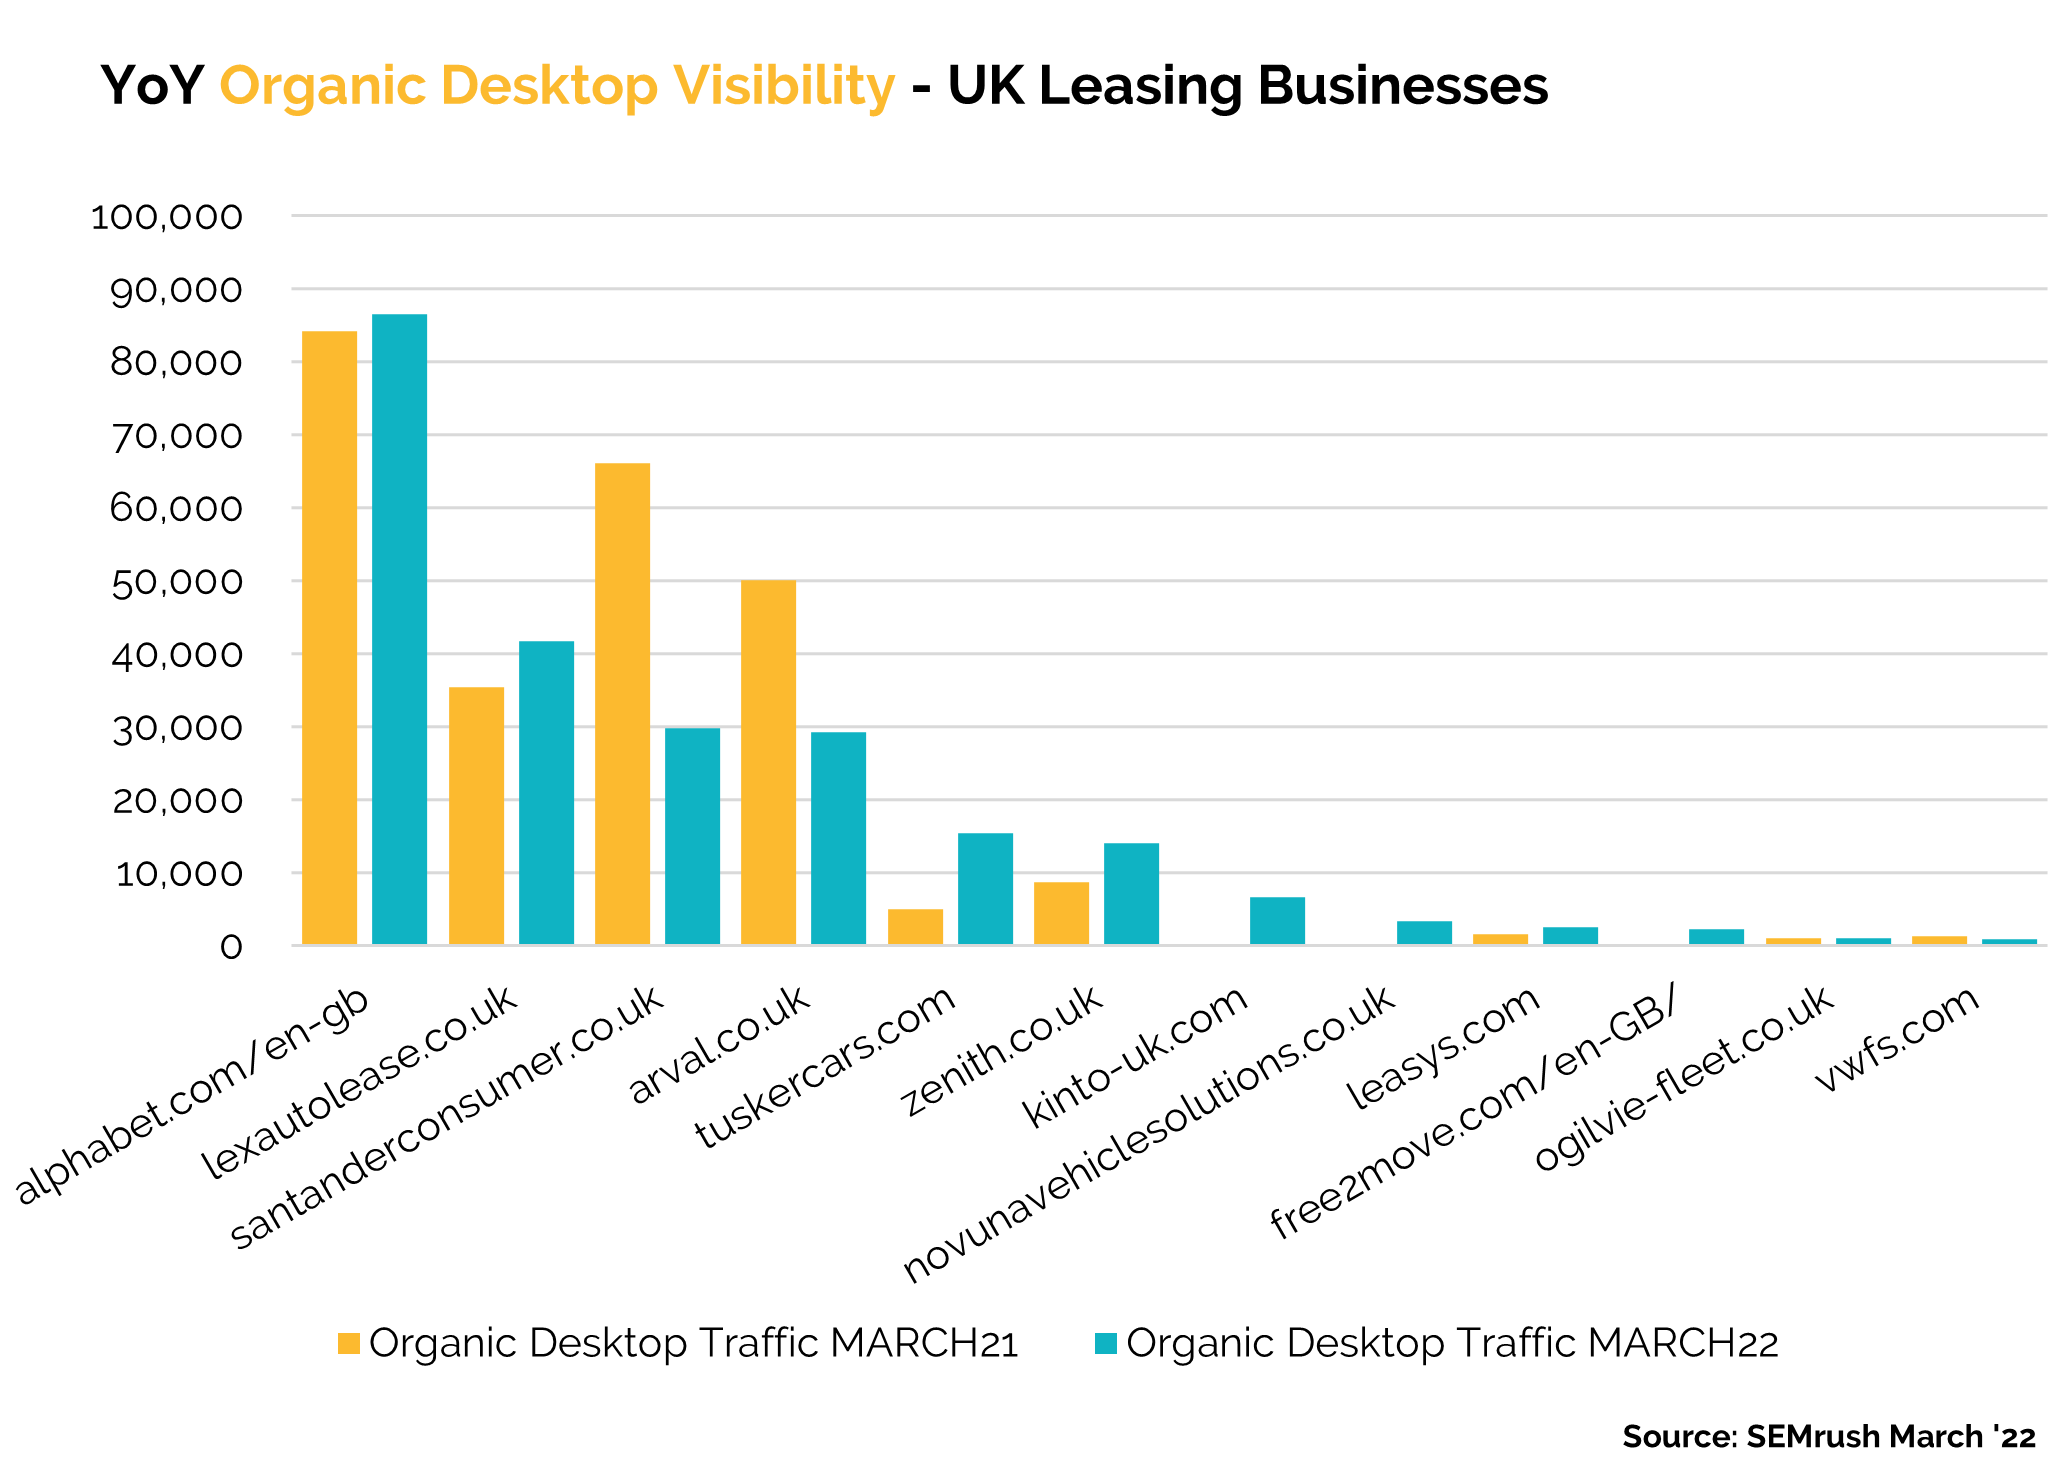 Organic visibility - Desktop - car leasing companies